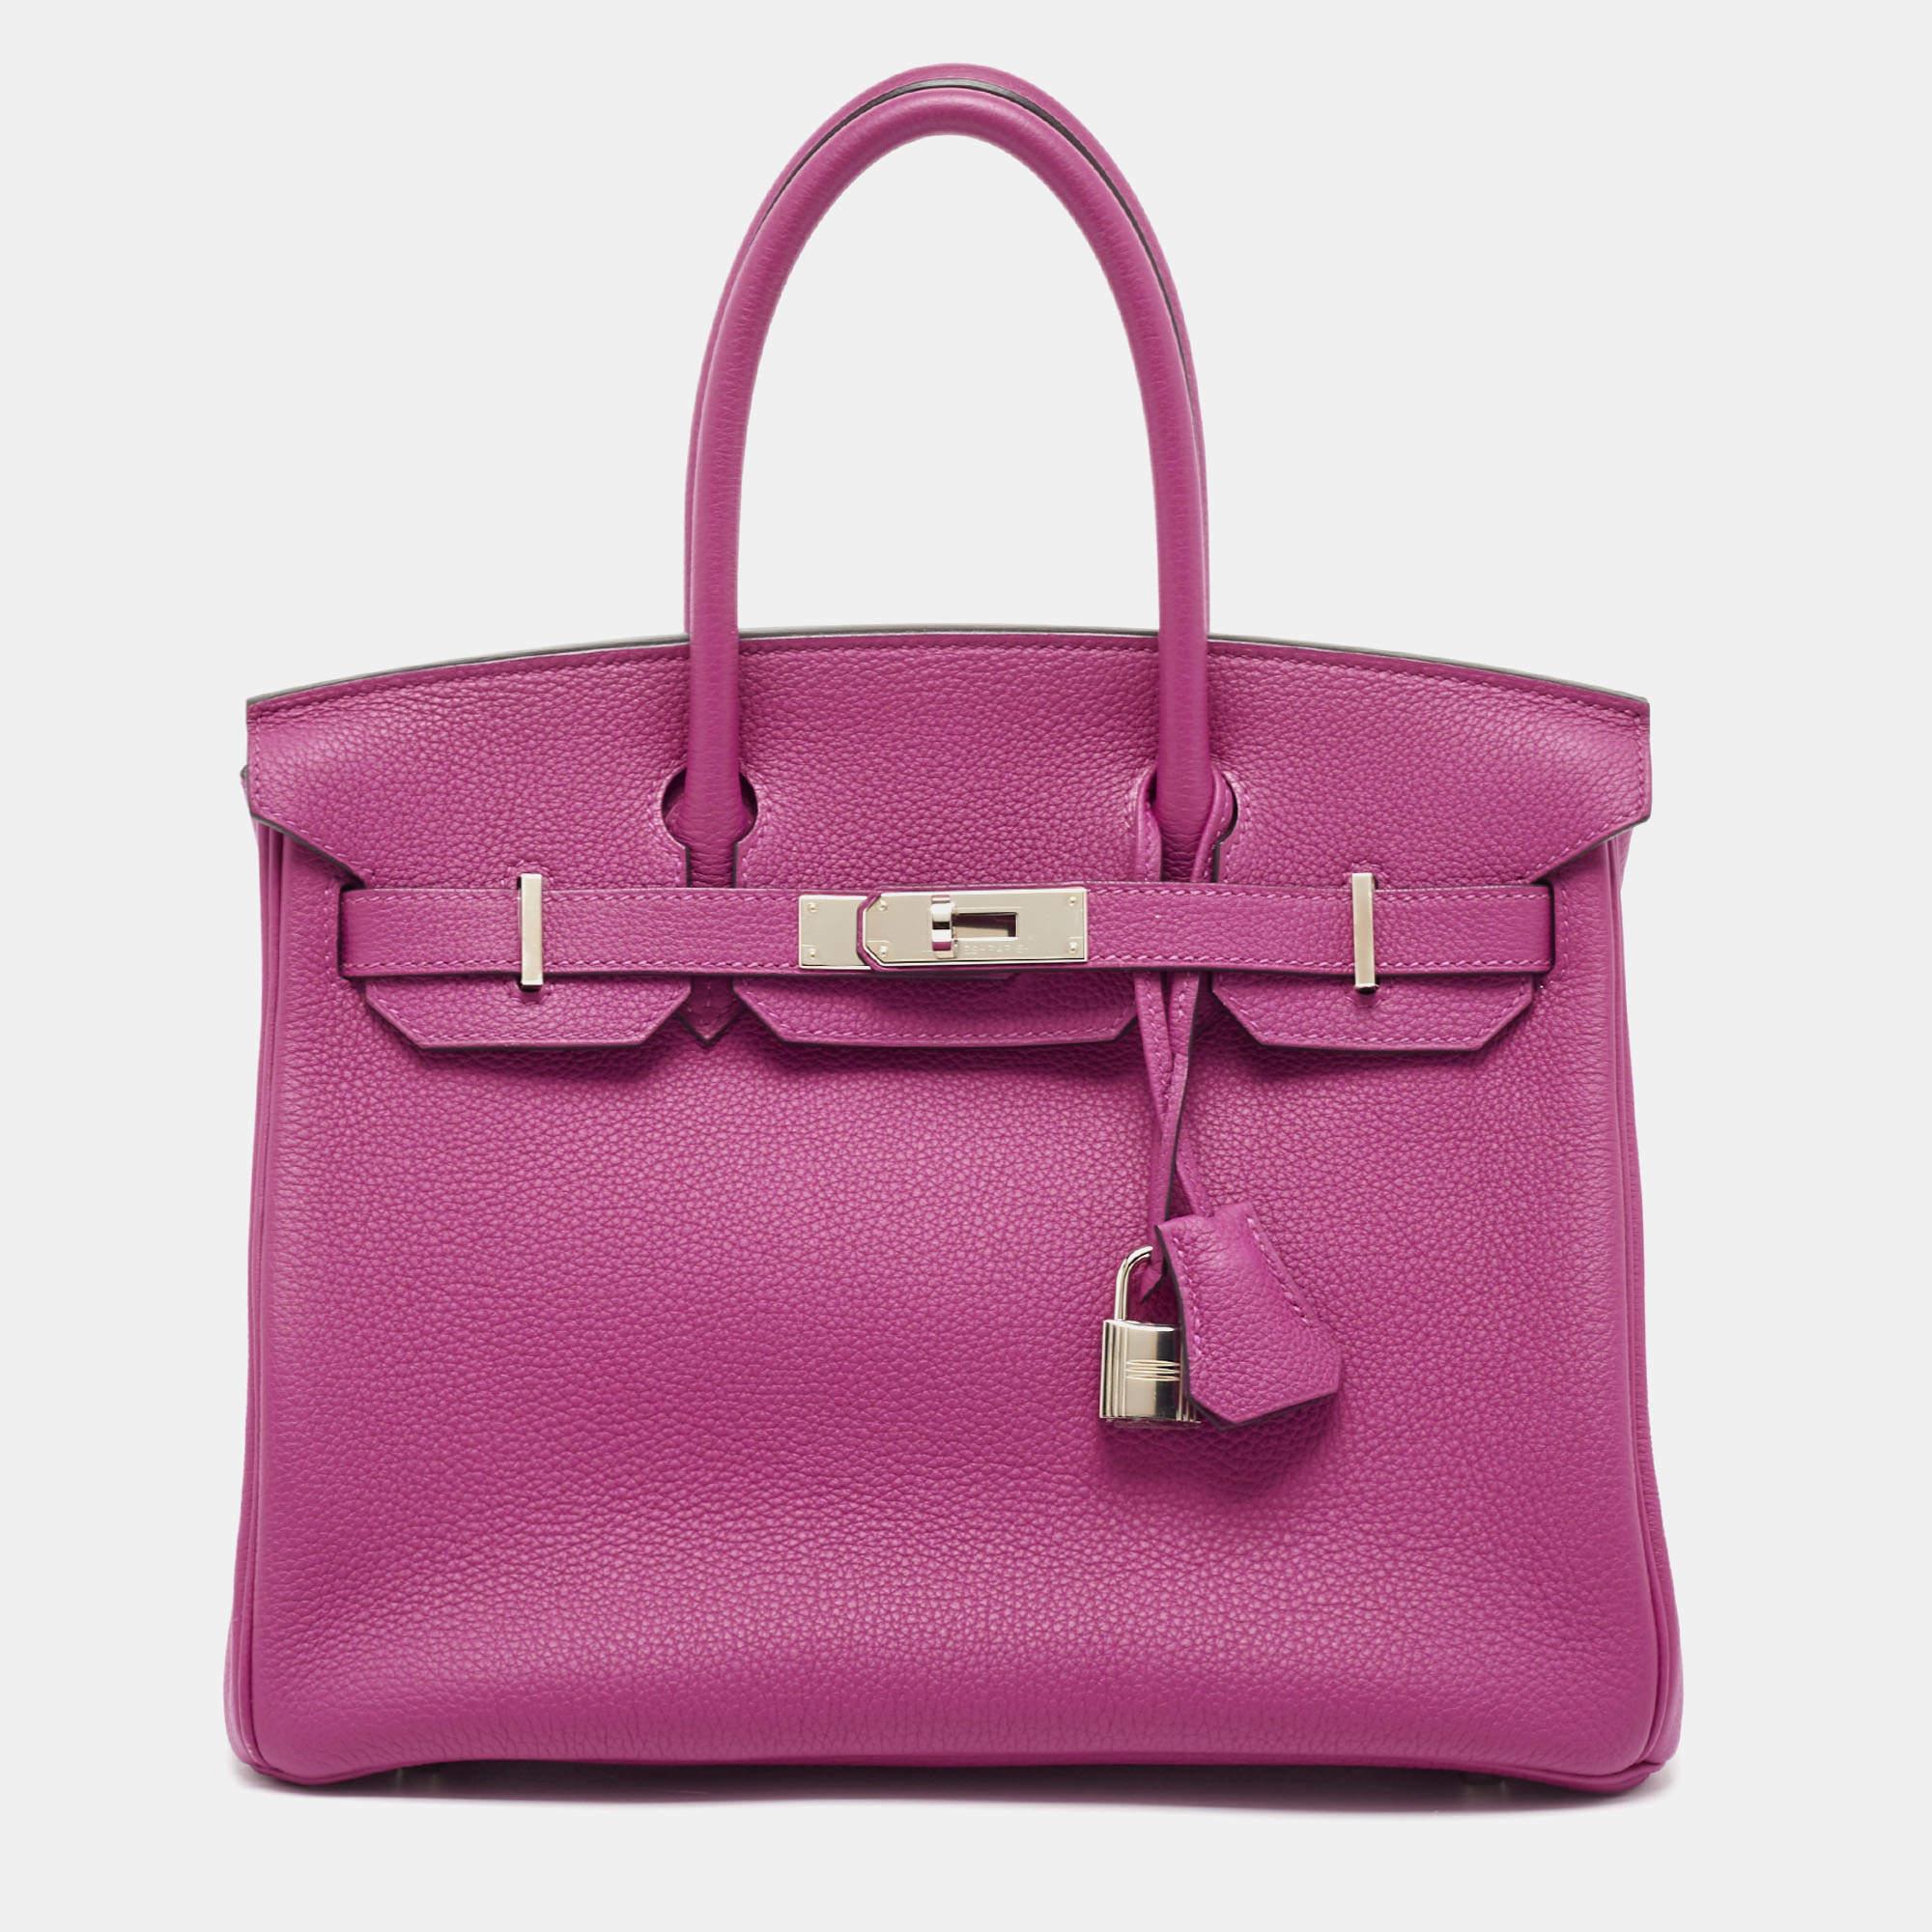 Hermès Rose Pourpre Togo Leather Palladium Finish Birkin 30 Bag 1